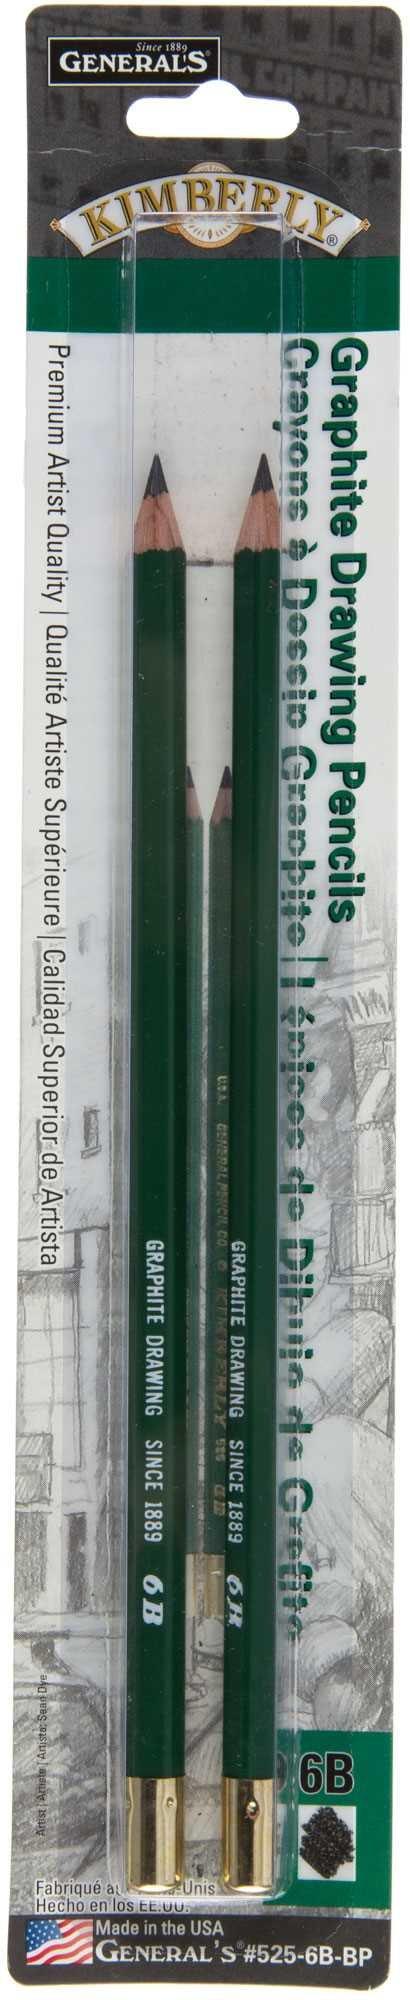 6B Kimberly Graphite Drawing Pencils - 2 Piece Set, Hobby Lobby